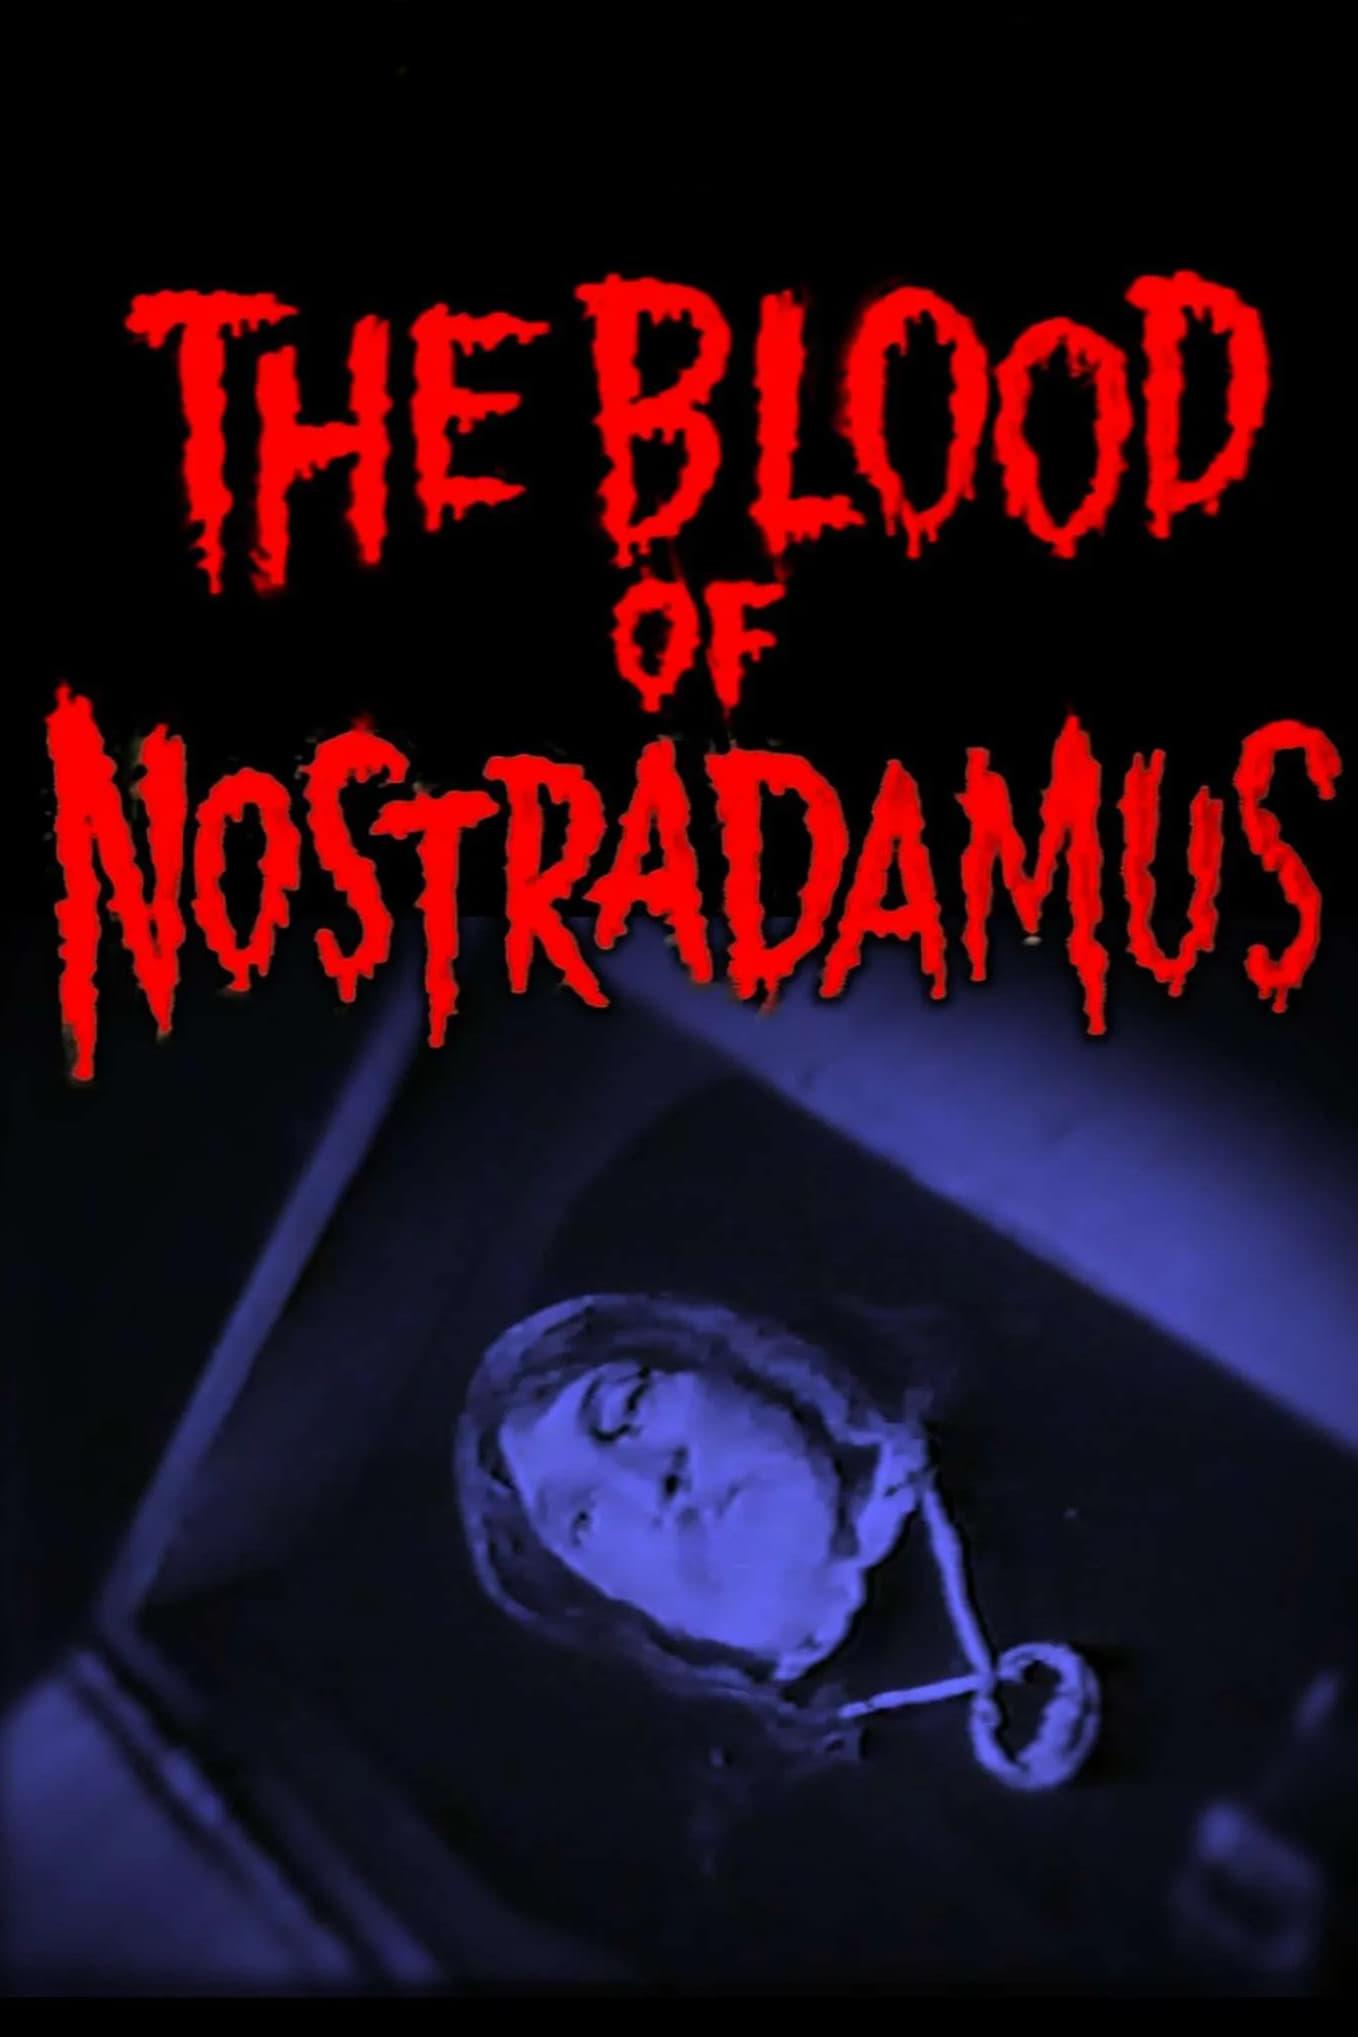 The Blood of Nostradamus poster